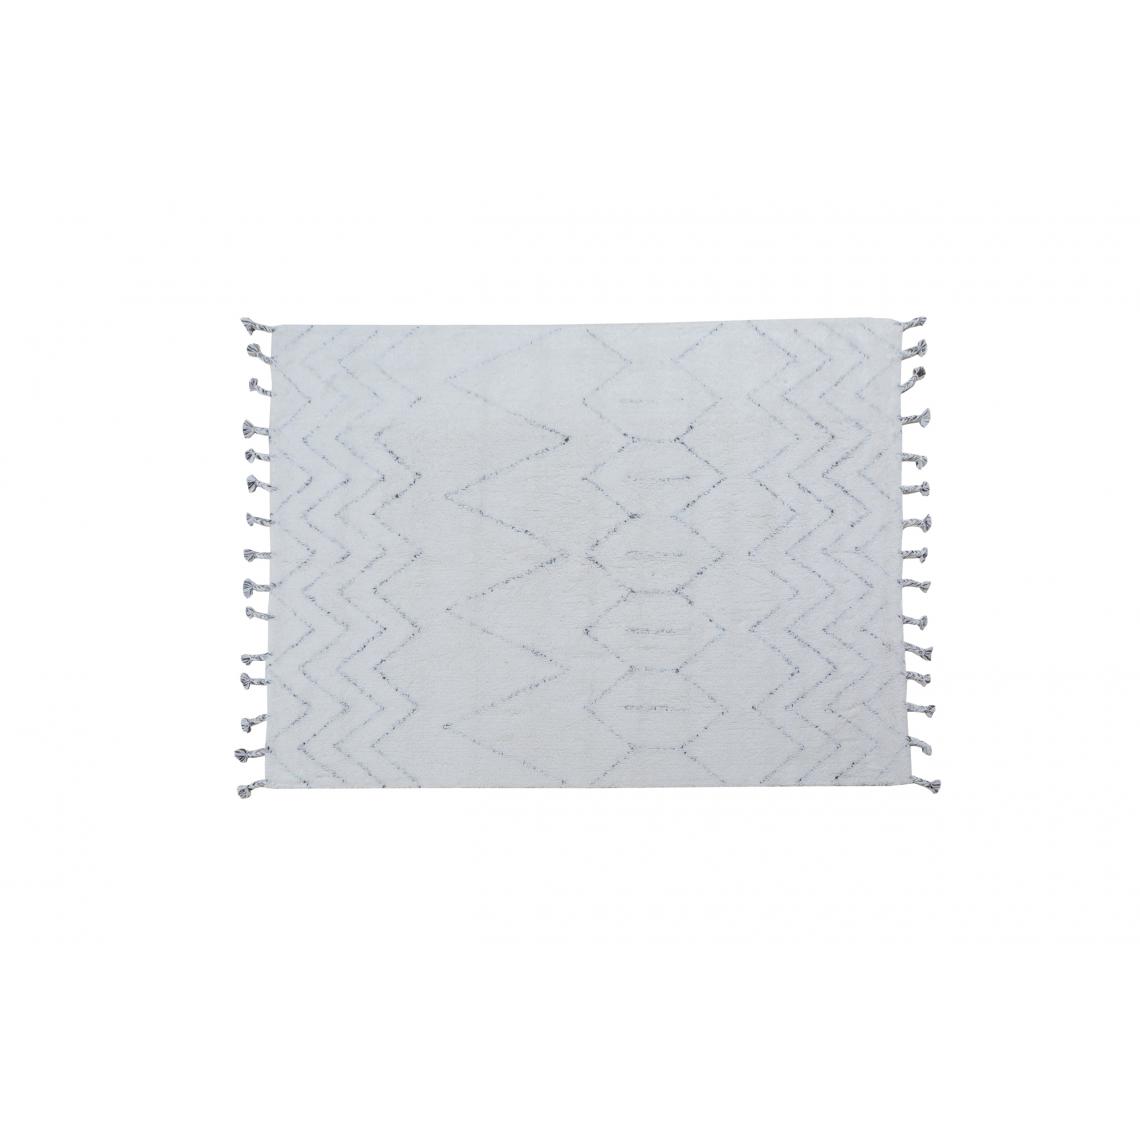 Alter - Tapis Californie moderne, style kilim, 100% coton, ivoire, 200x140cm - Tapis